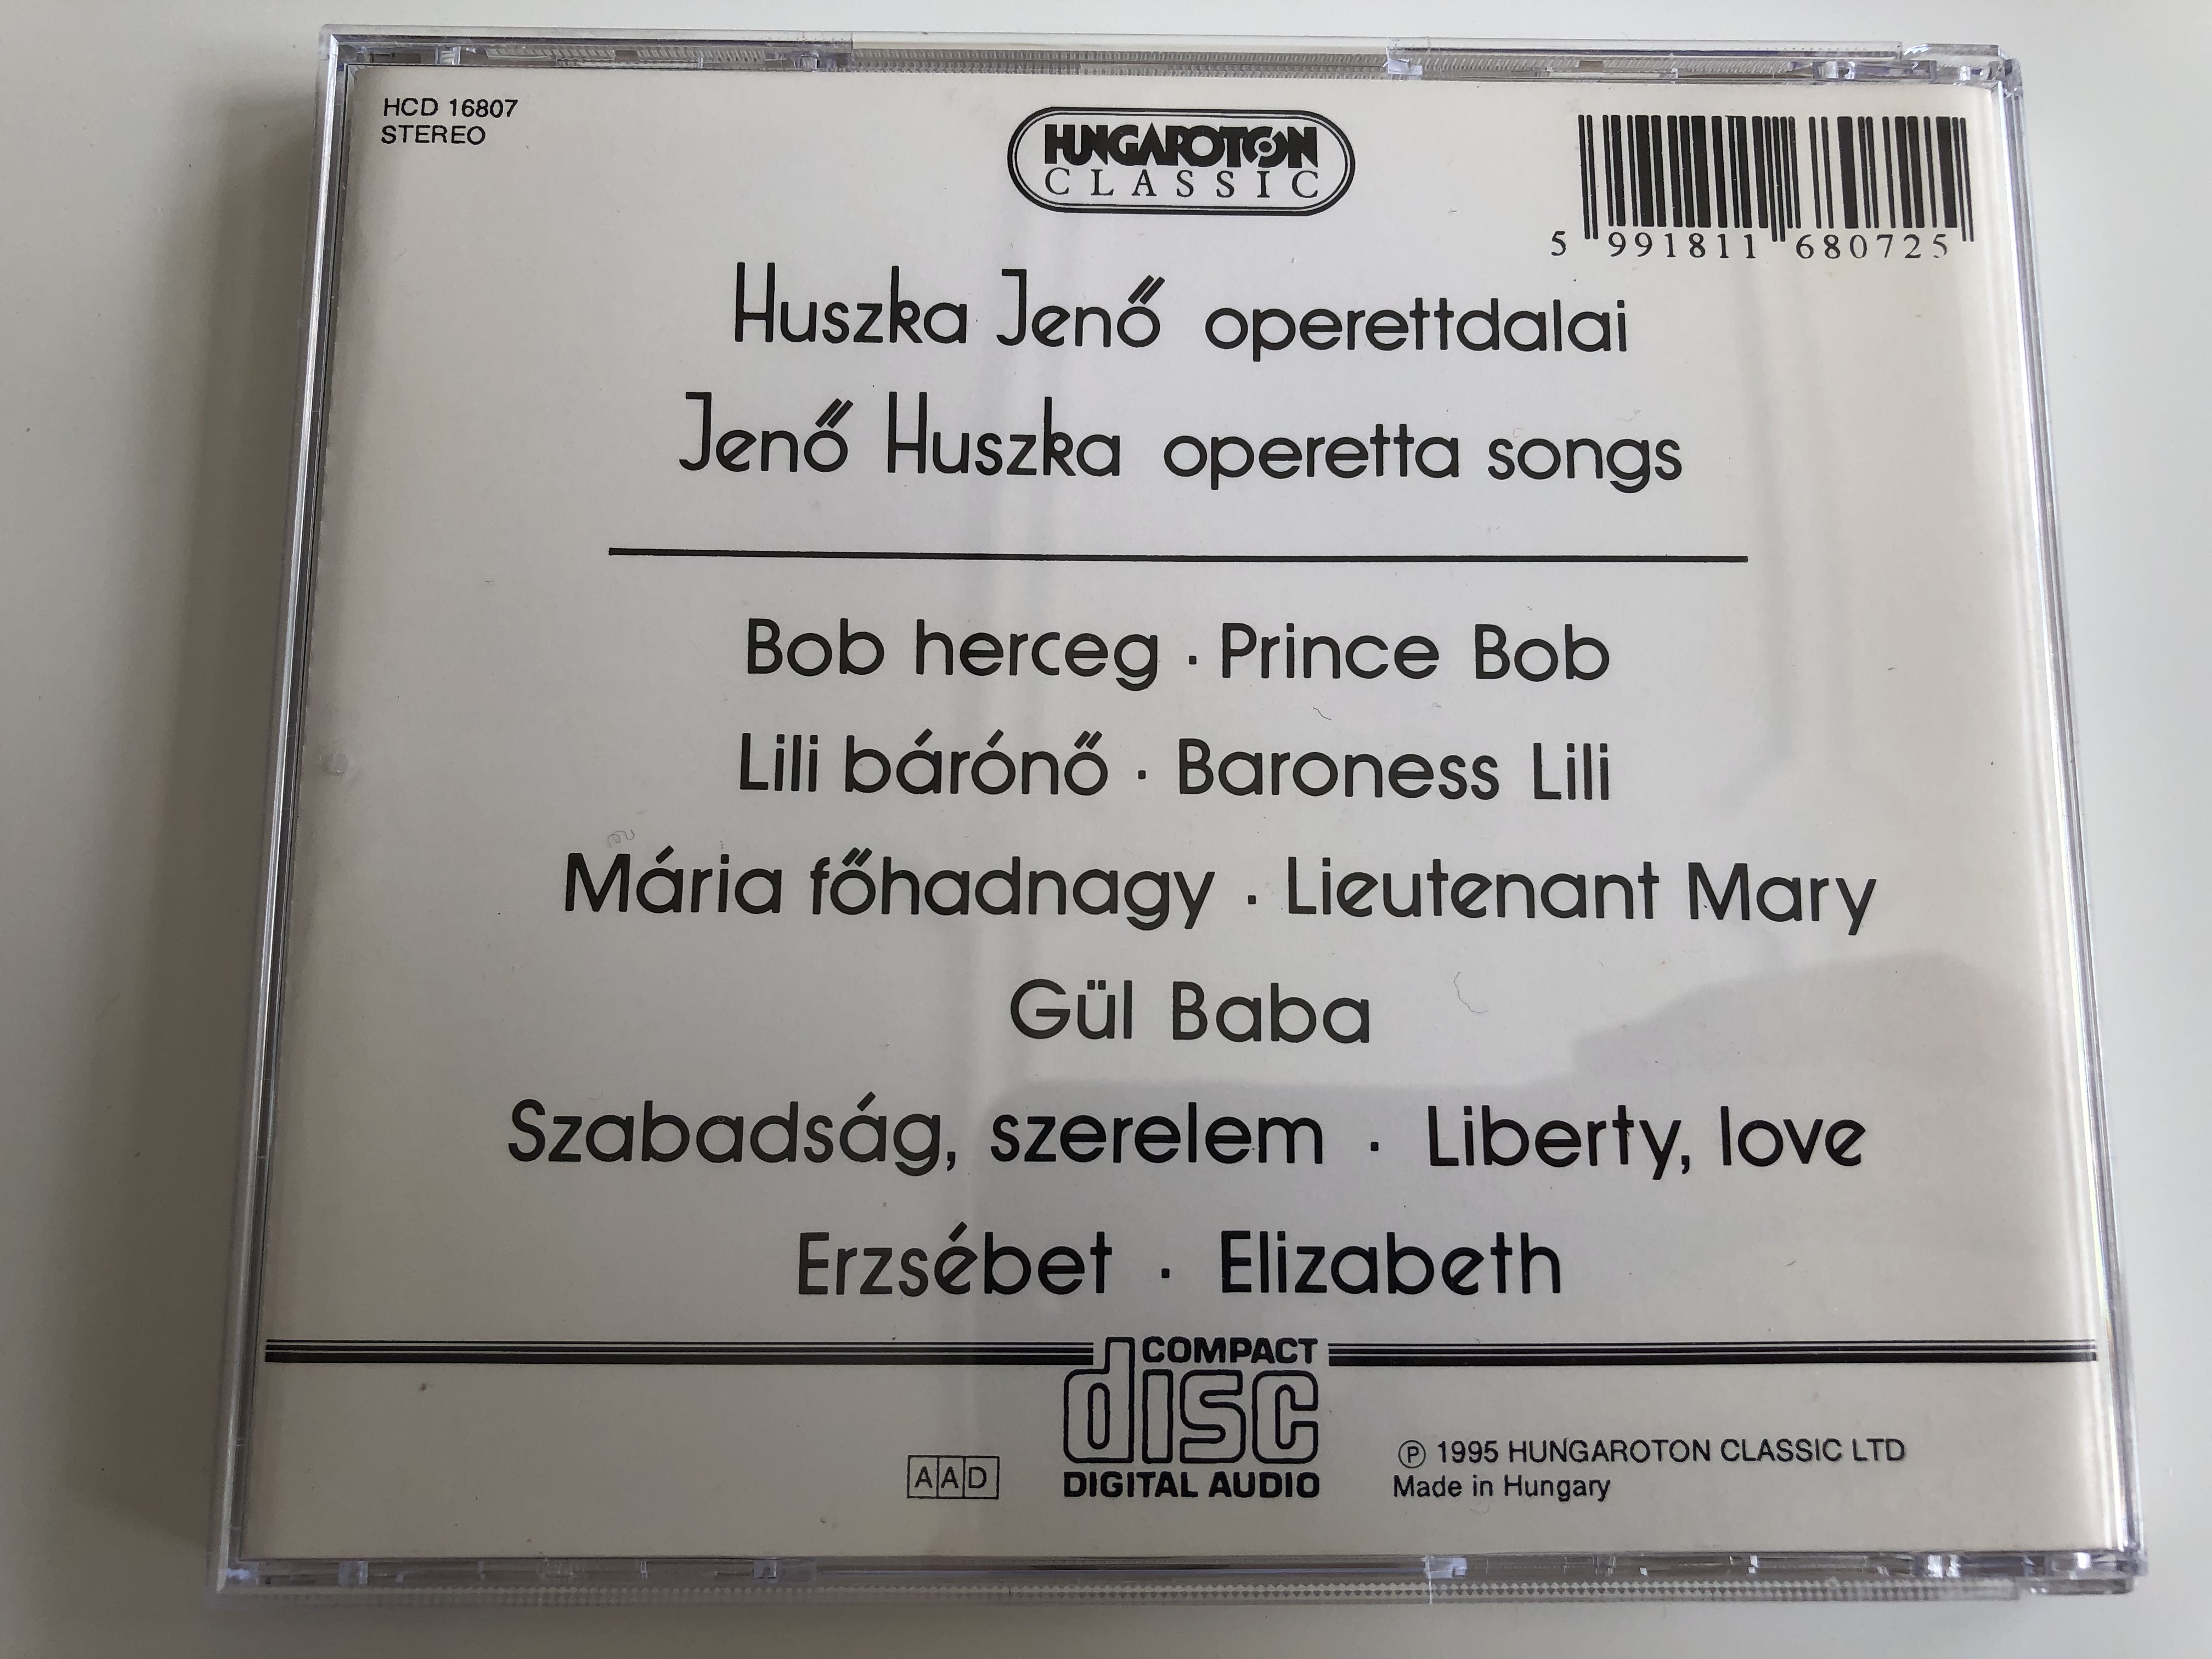 on-wings-of-breeze-jen-huszka-operetta-songs-hungaroton-classic-audio-cd-1995-szell-sz-rny-n-huszka-jen-operettdalai-hcd-16807-7-.jpg